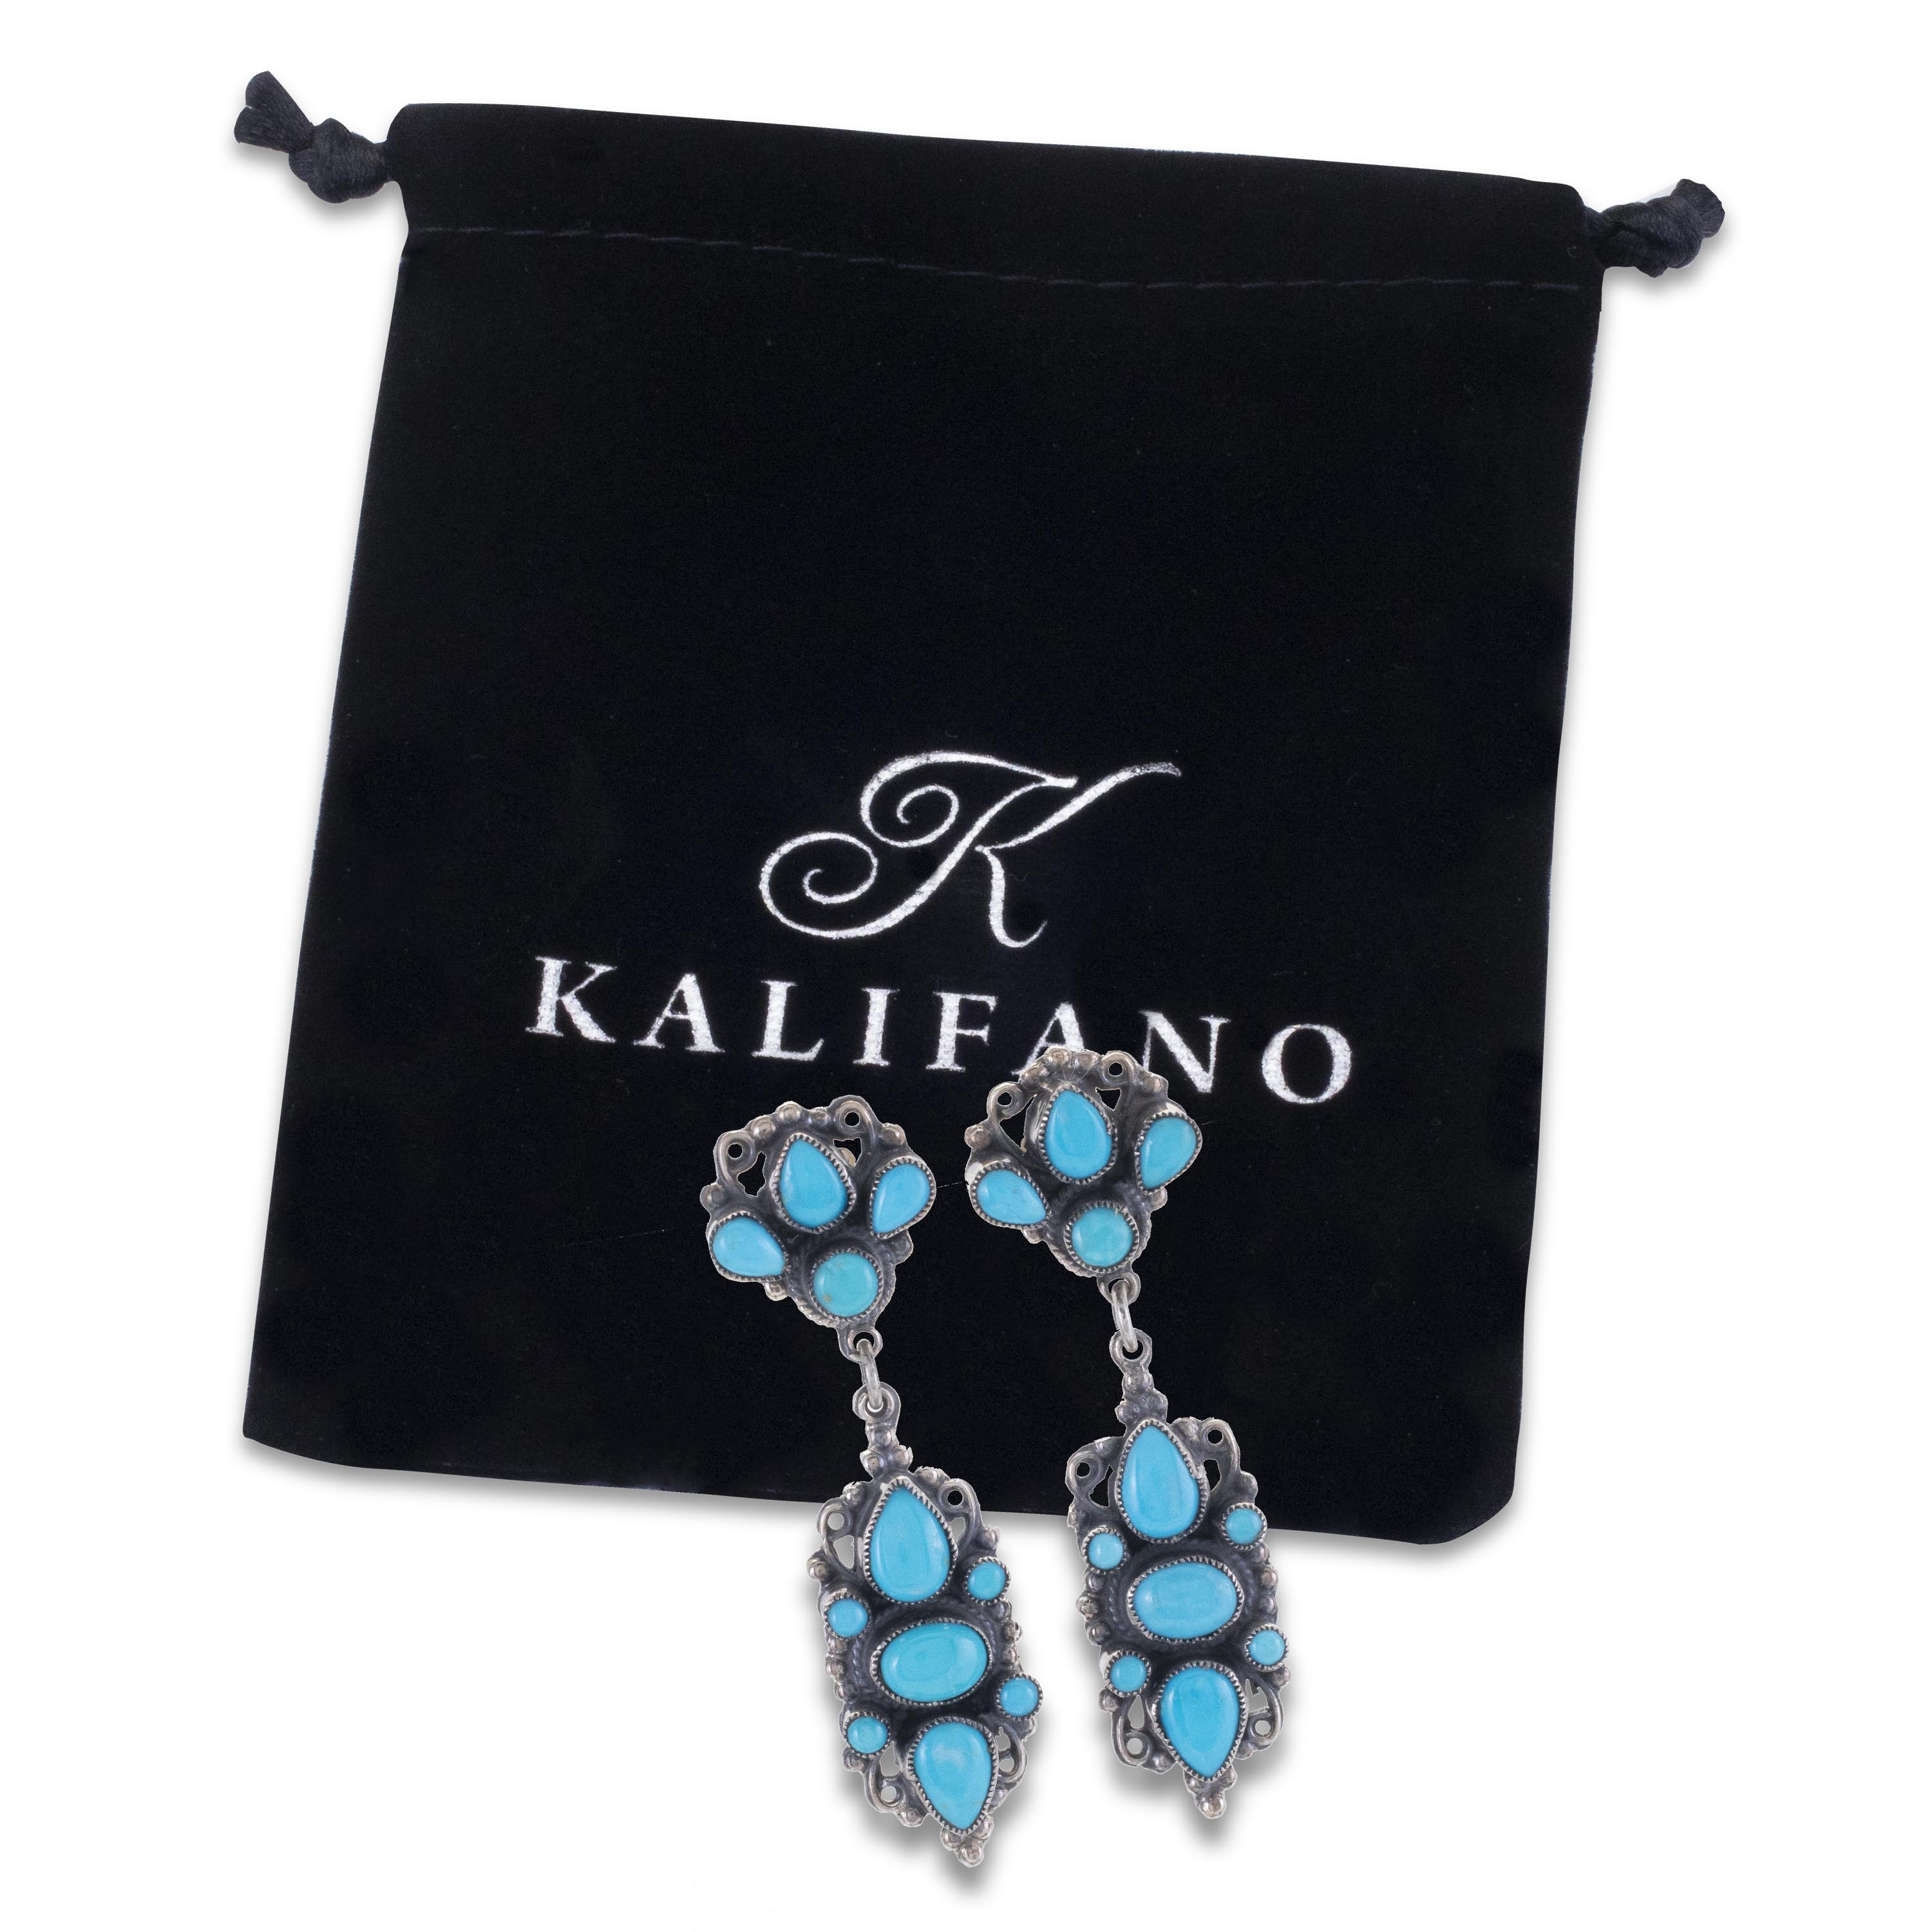 Kalifano Native American Jewelry Leo Feeney Navajo Sleeping Beauty Turquoise USA Native American Made 925 Sterling Silver Dangly Earrings NAE2400.001